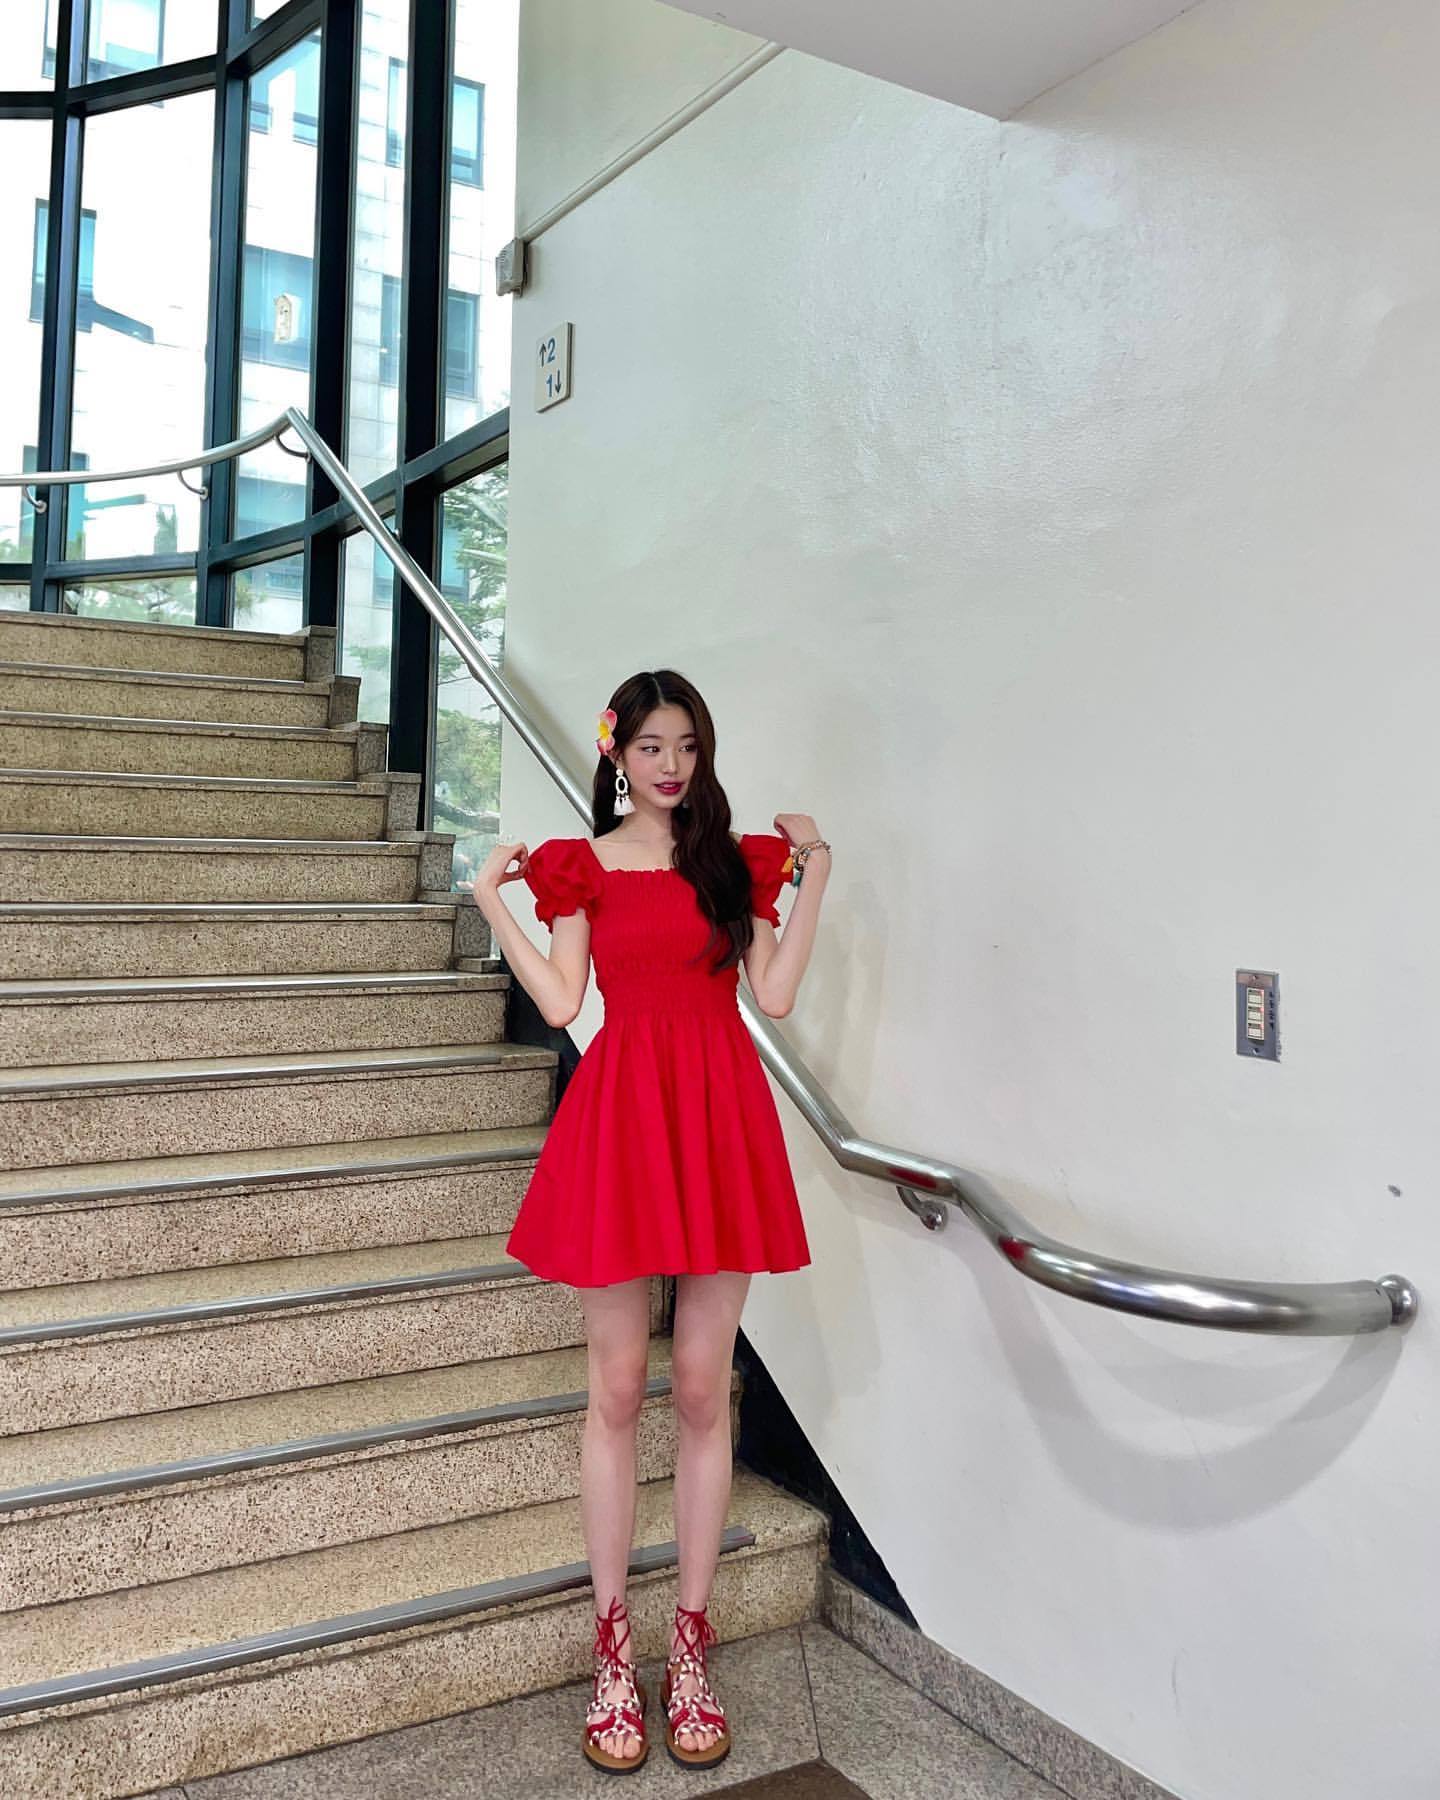 IVE张元英晒红裙美照，秀出173厘米模特般身材，超细的大长腿吸睛